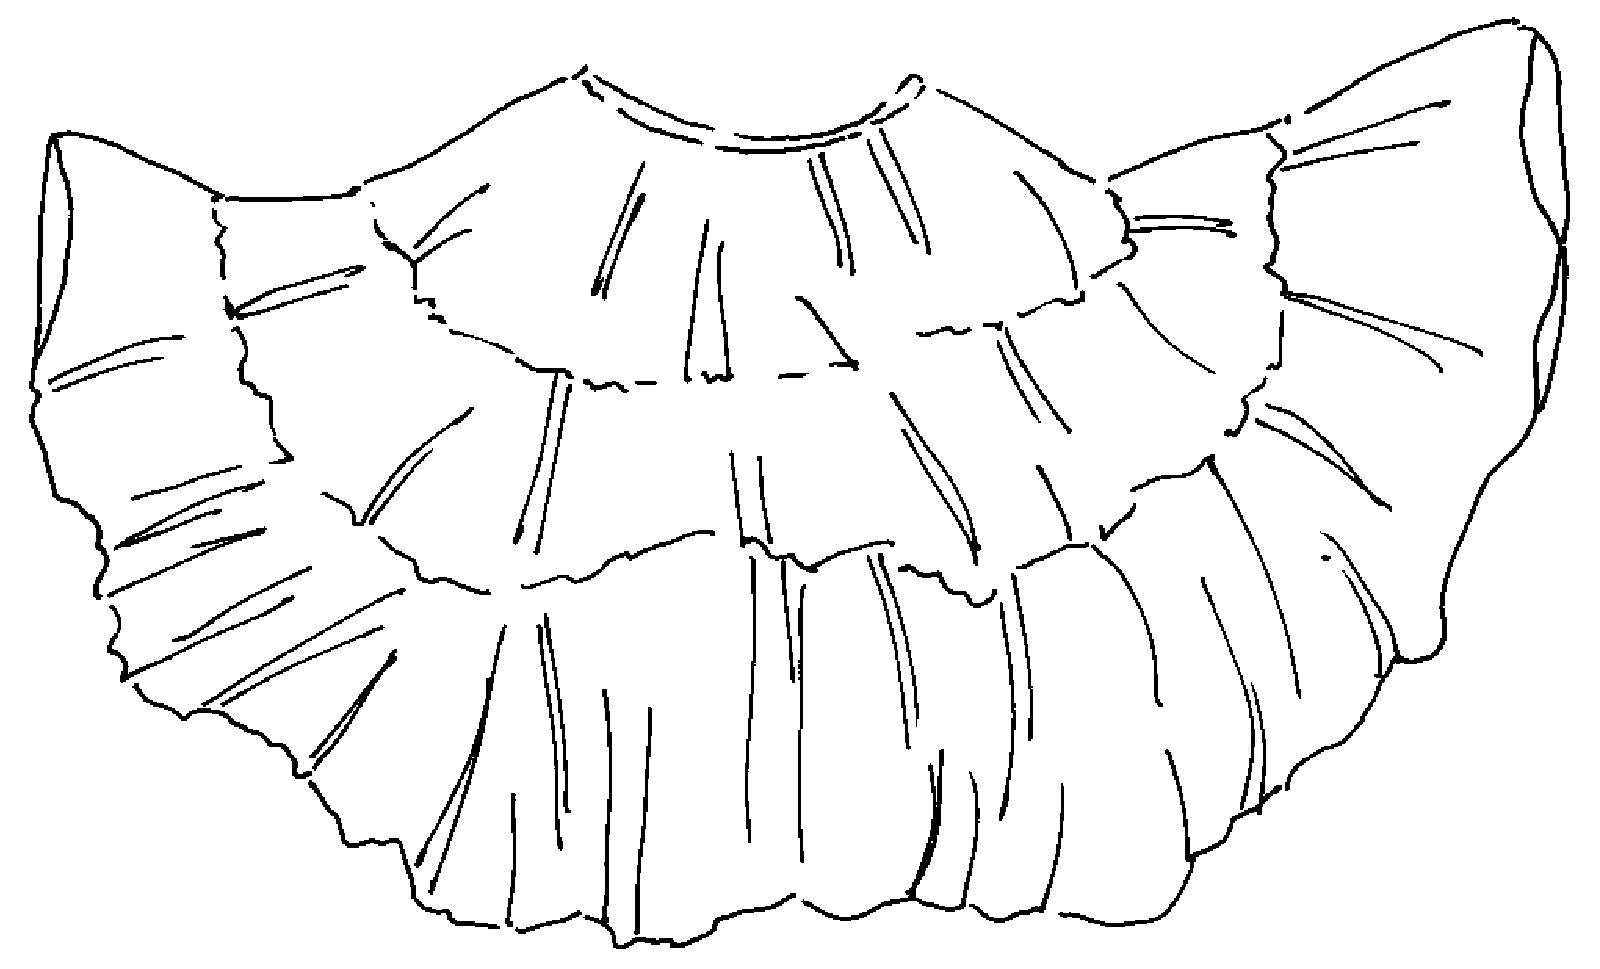 Flat line drawing of ten-yard skirt